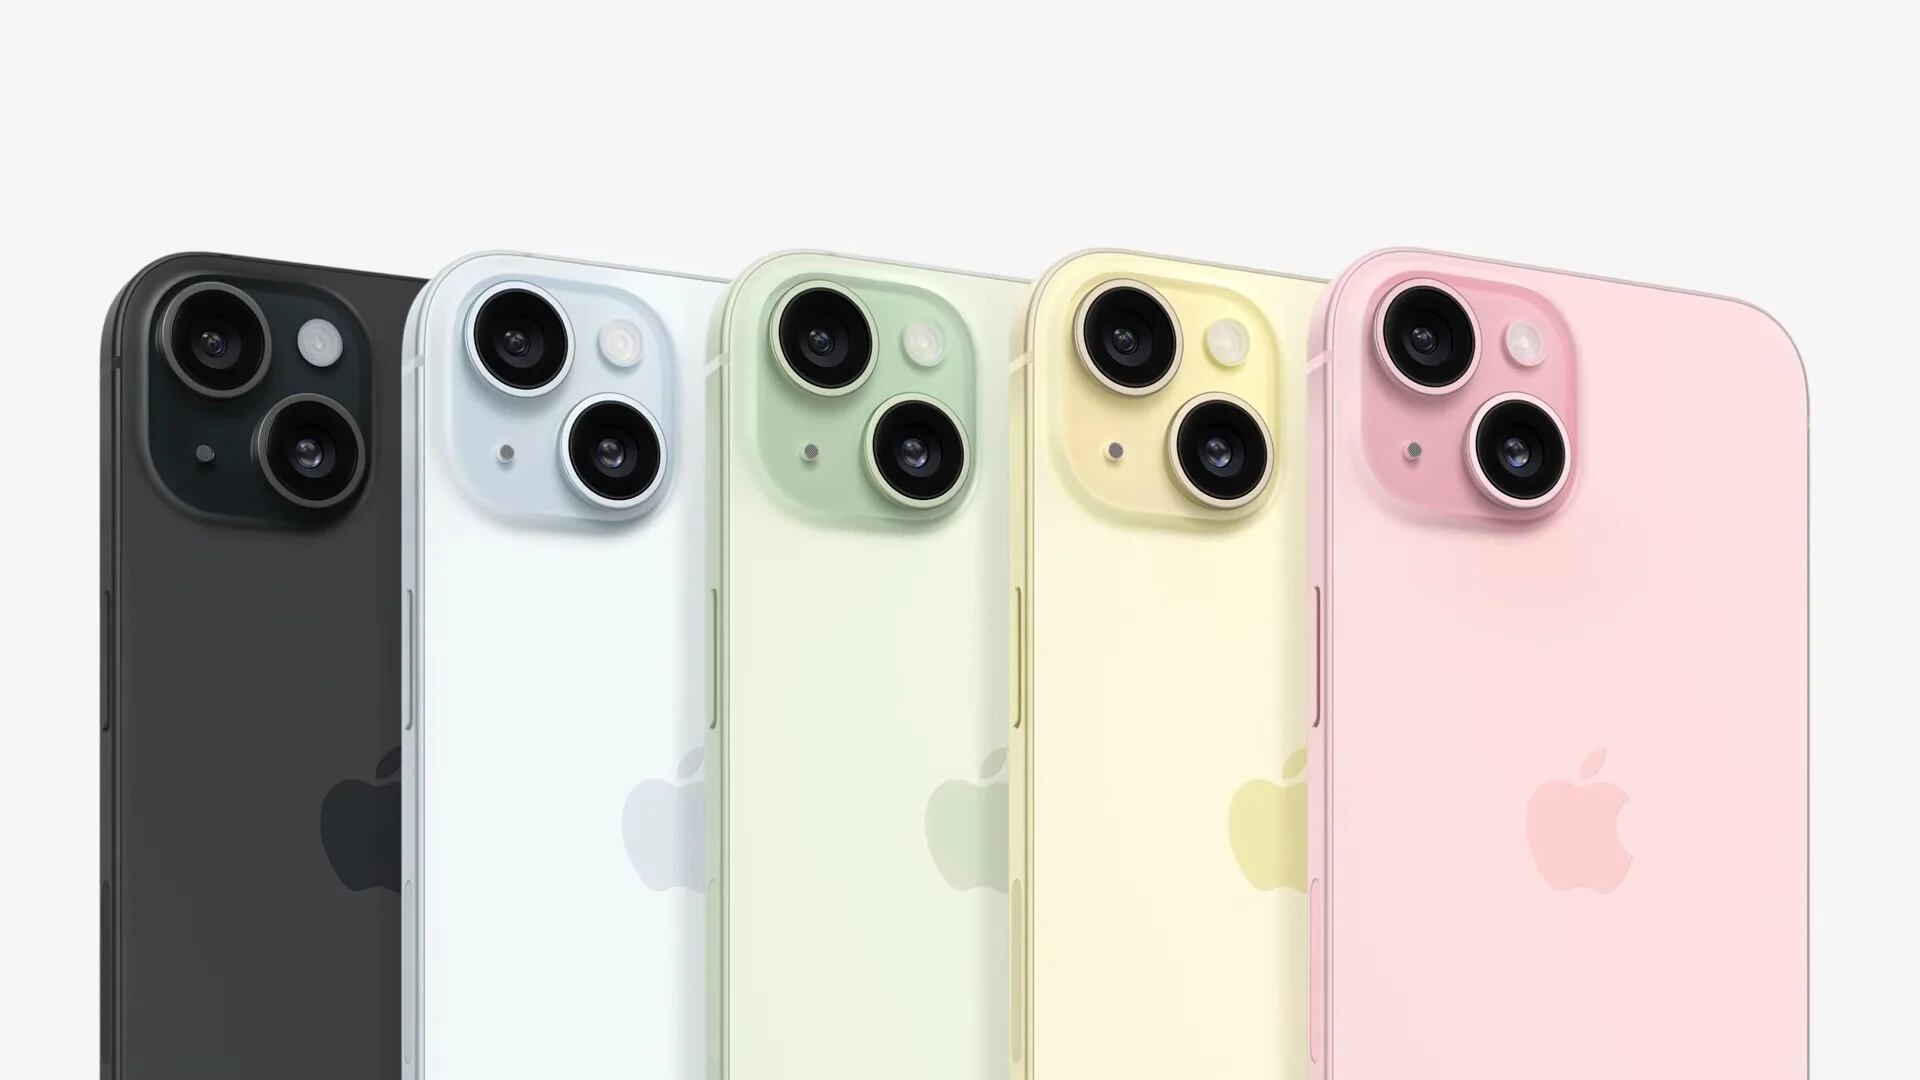 Verdad o mentira: Apple eliminó estos botones del iPhone